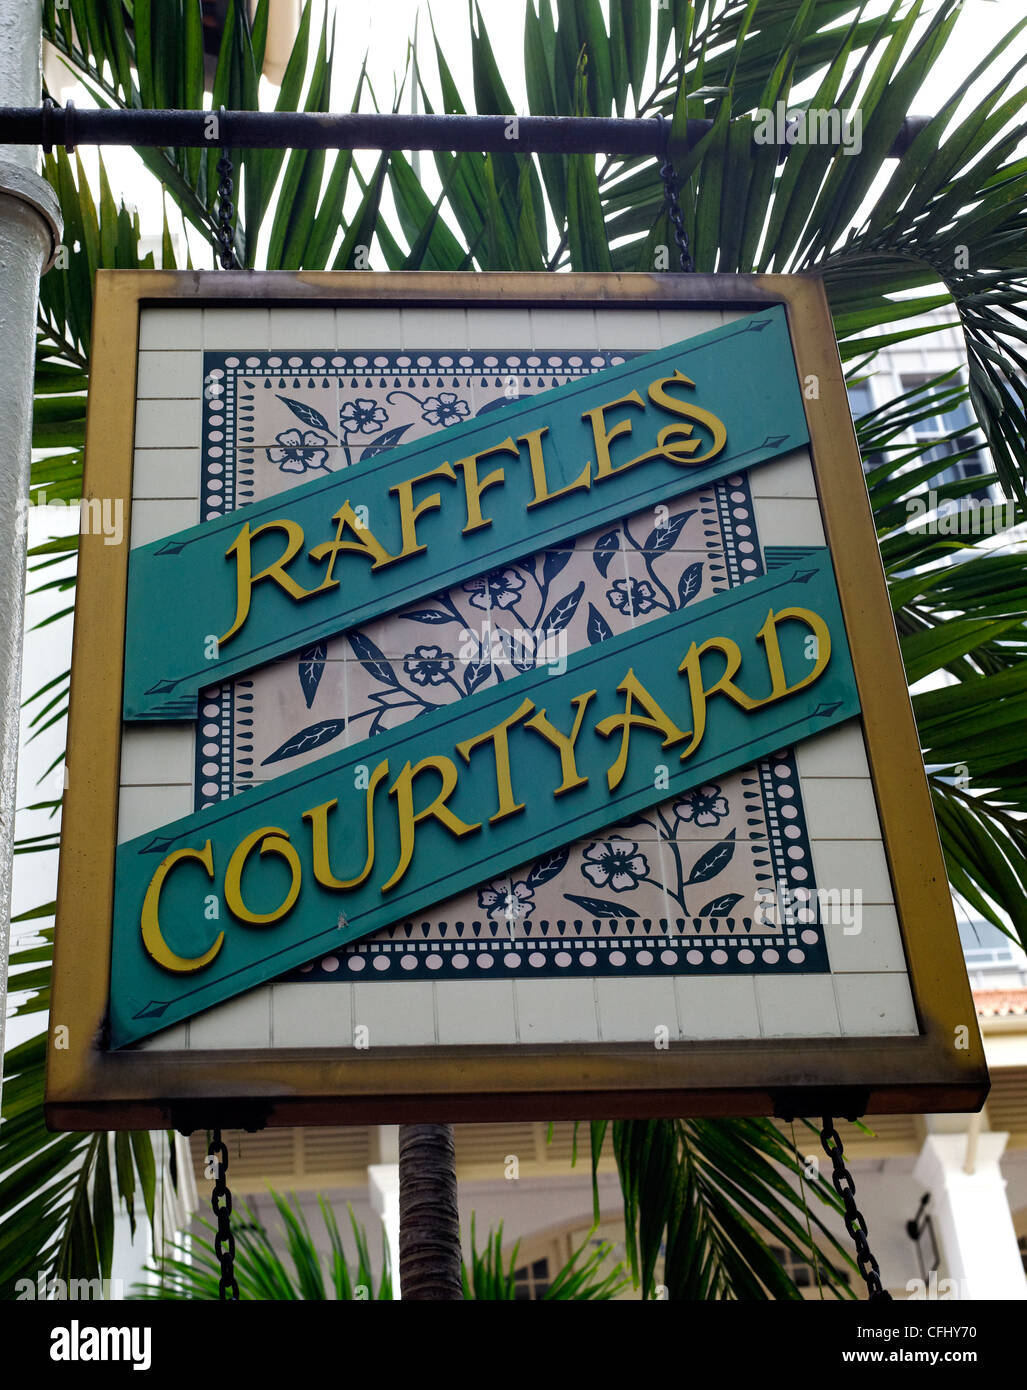 Ornate sign for Raffles Courtyard, Raffles Hotel, Singapore Stock Photo